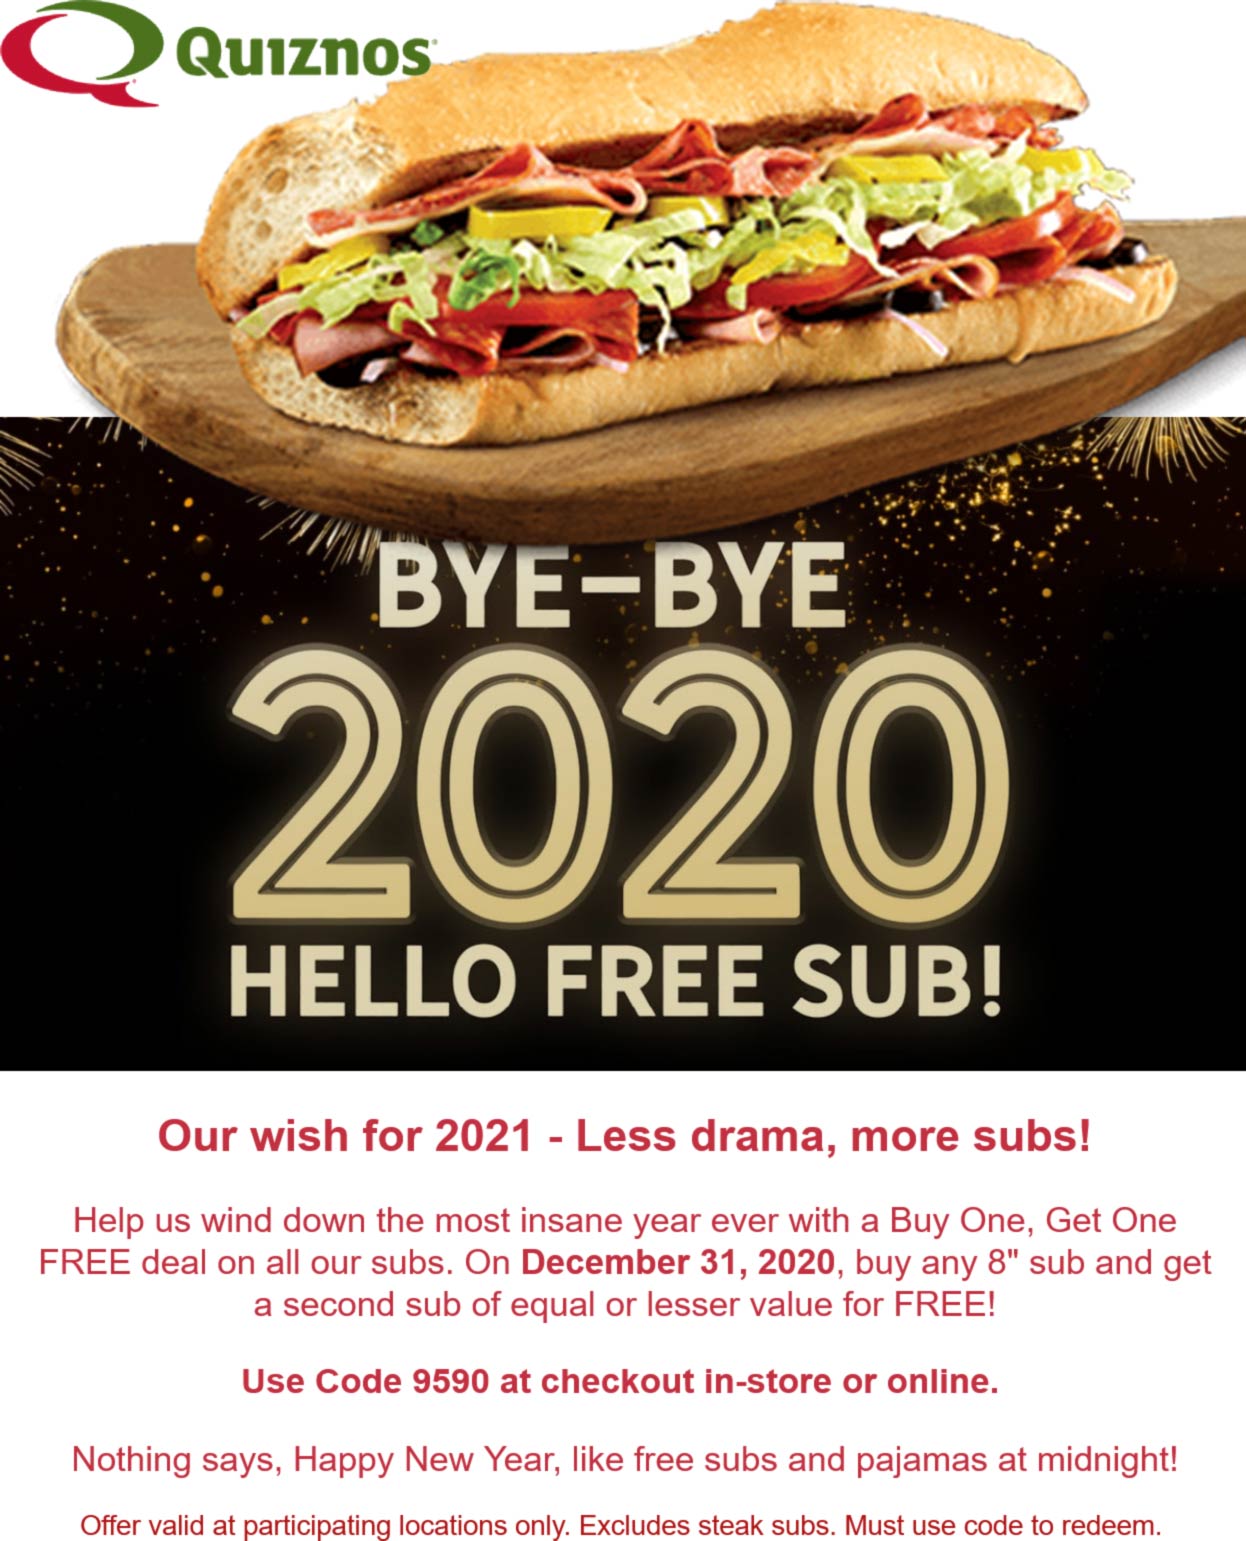 Quiznos restaurants Coupon  Second sub sandwich free Thursday at Quiznos via promo code 9590 #quiznos 